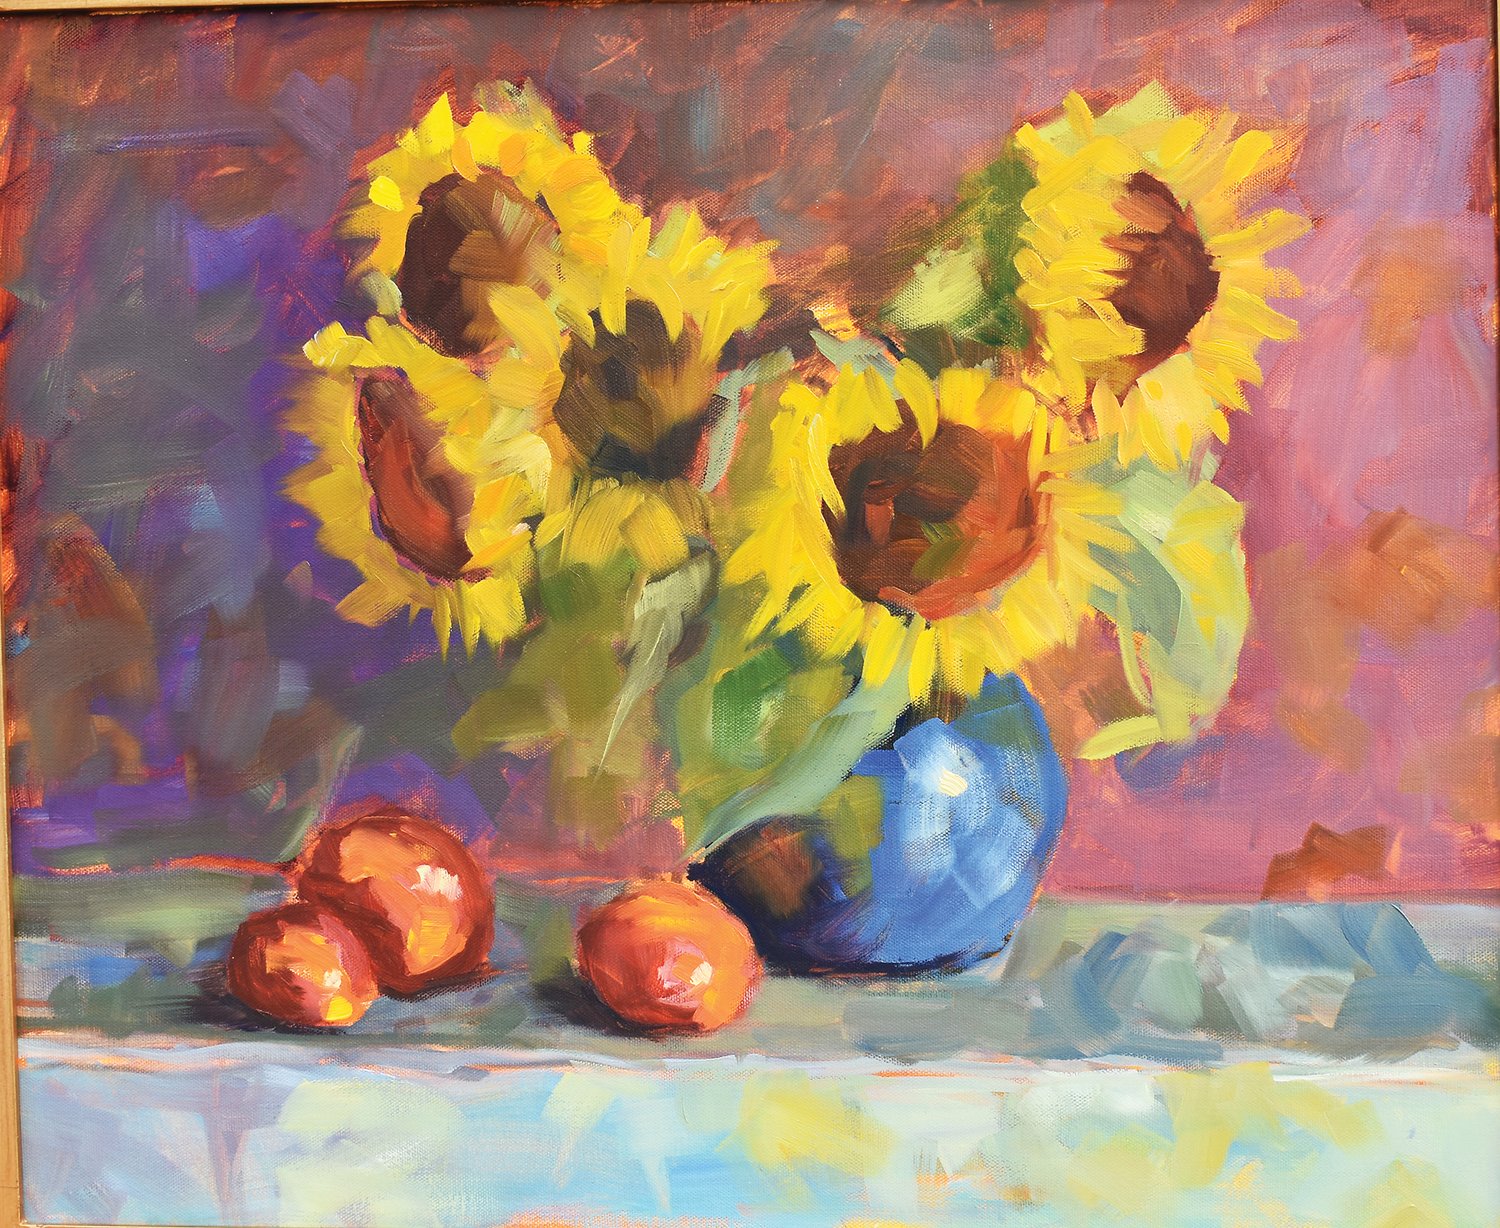 “Sunflowers” by Jeff Charlesworth